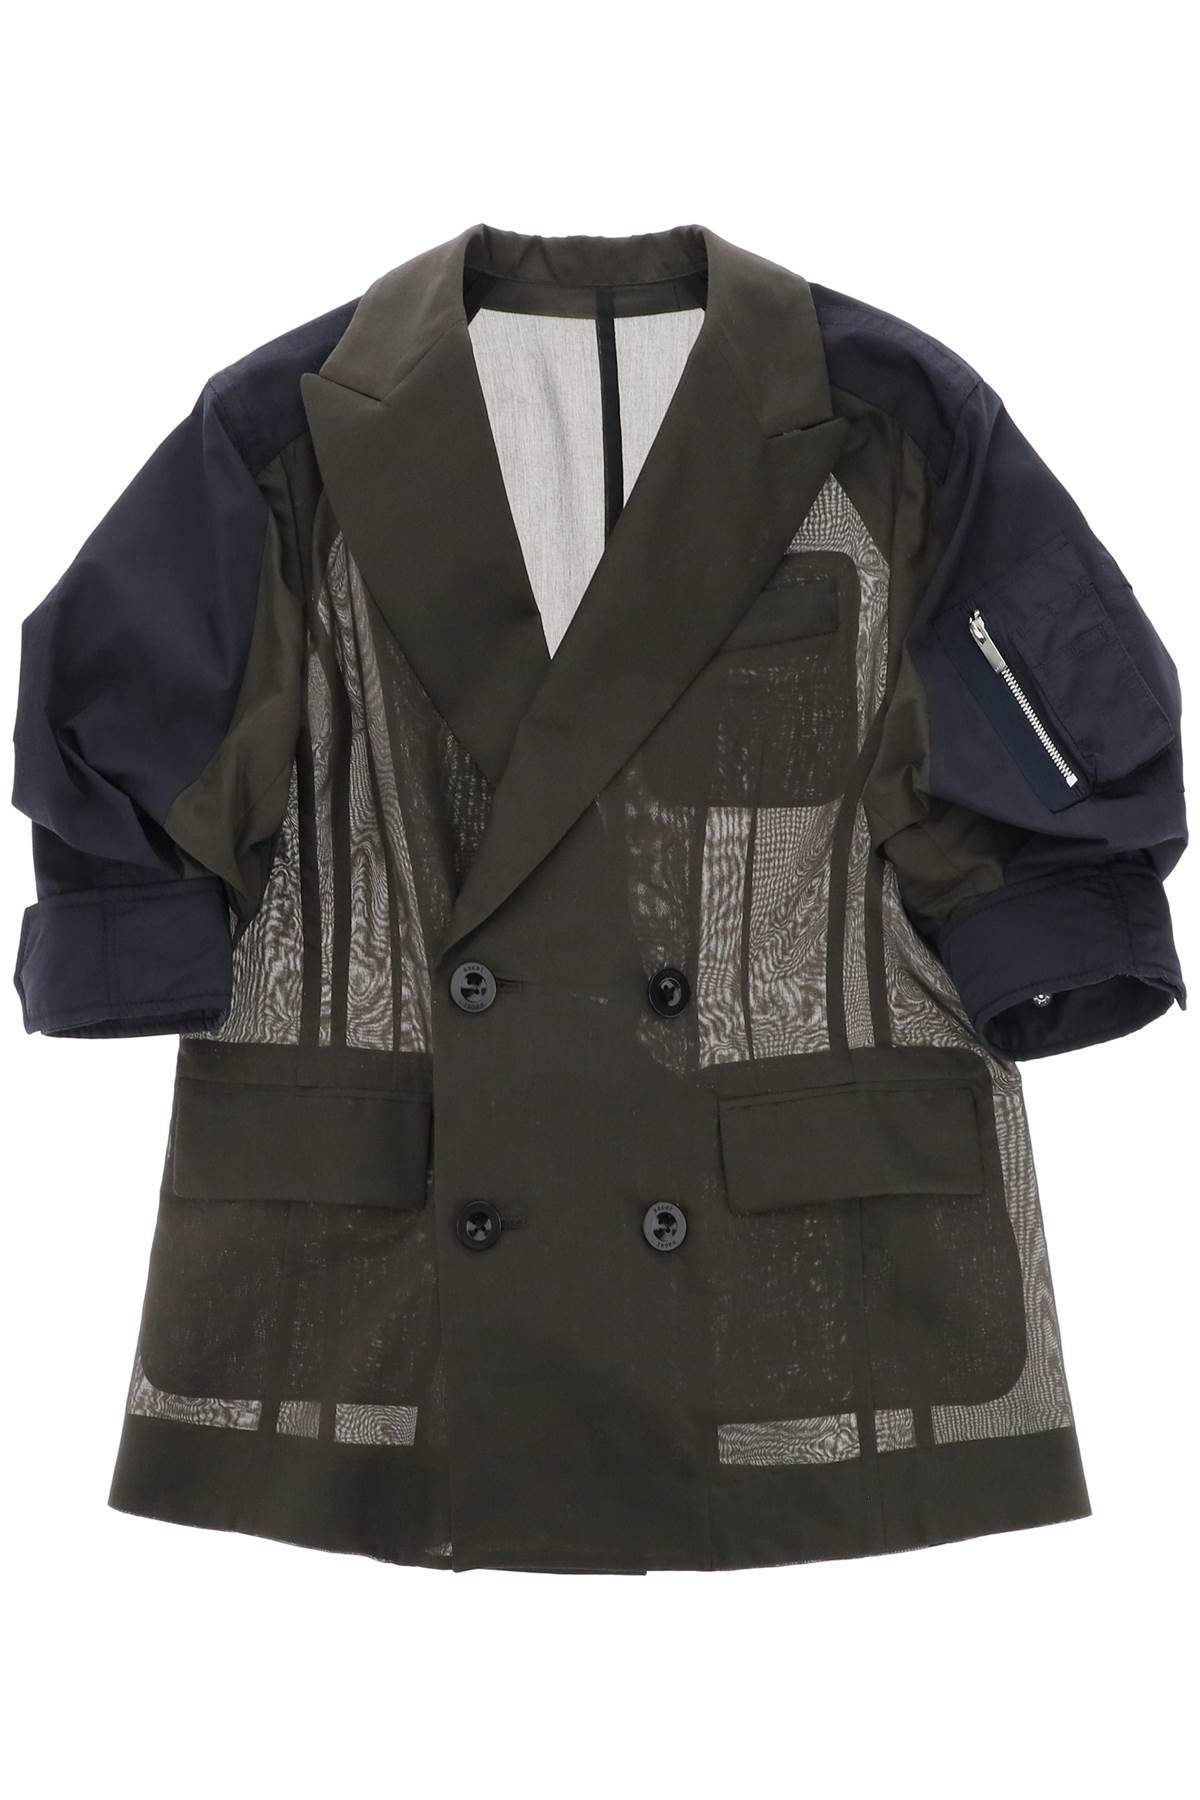 Sacai SACAI taffeta sleeve jacket with eight